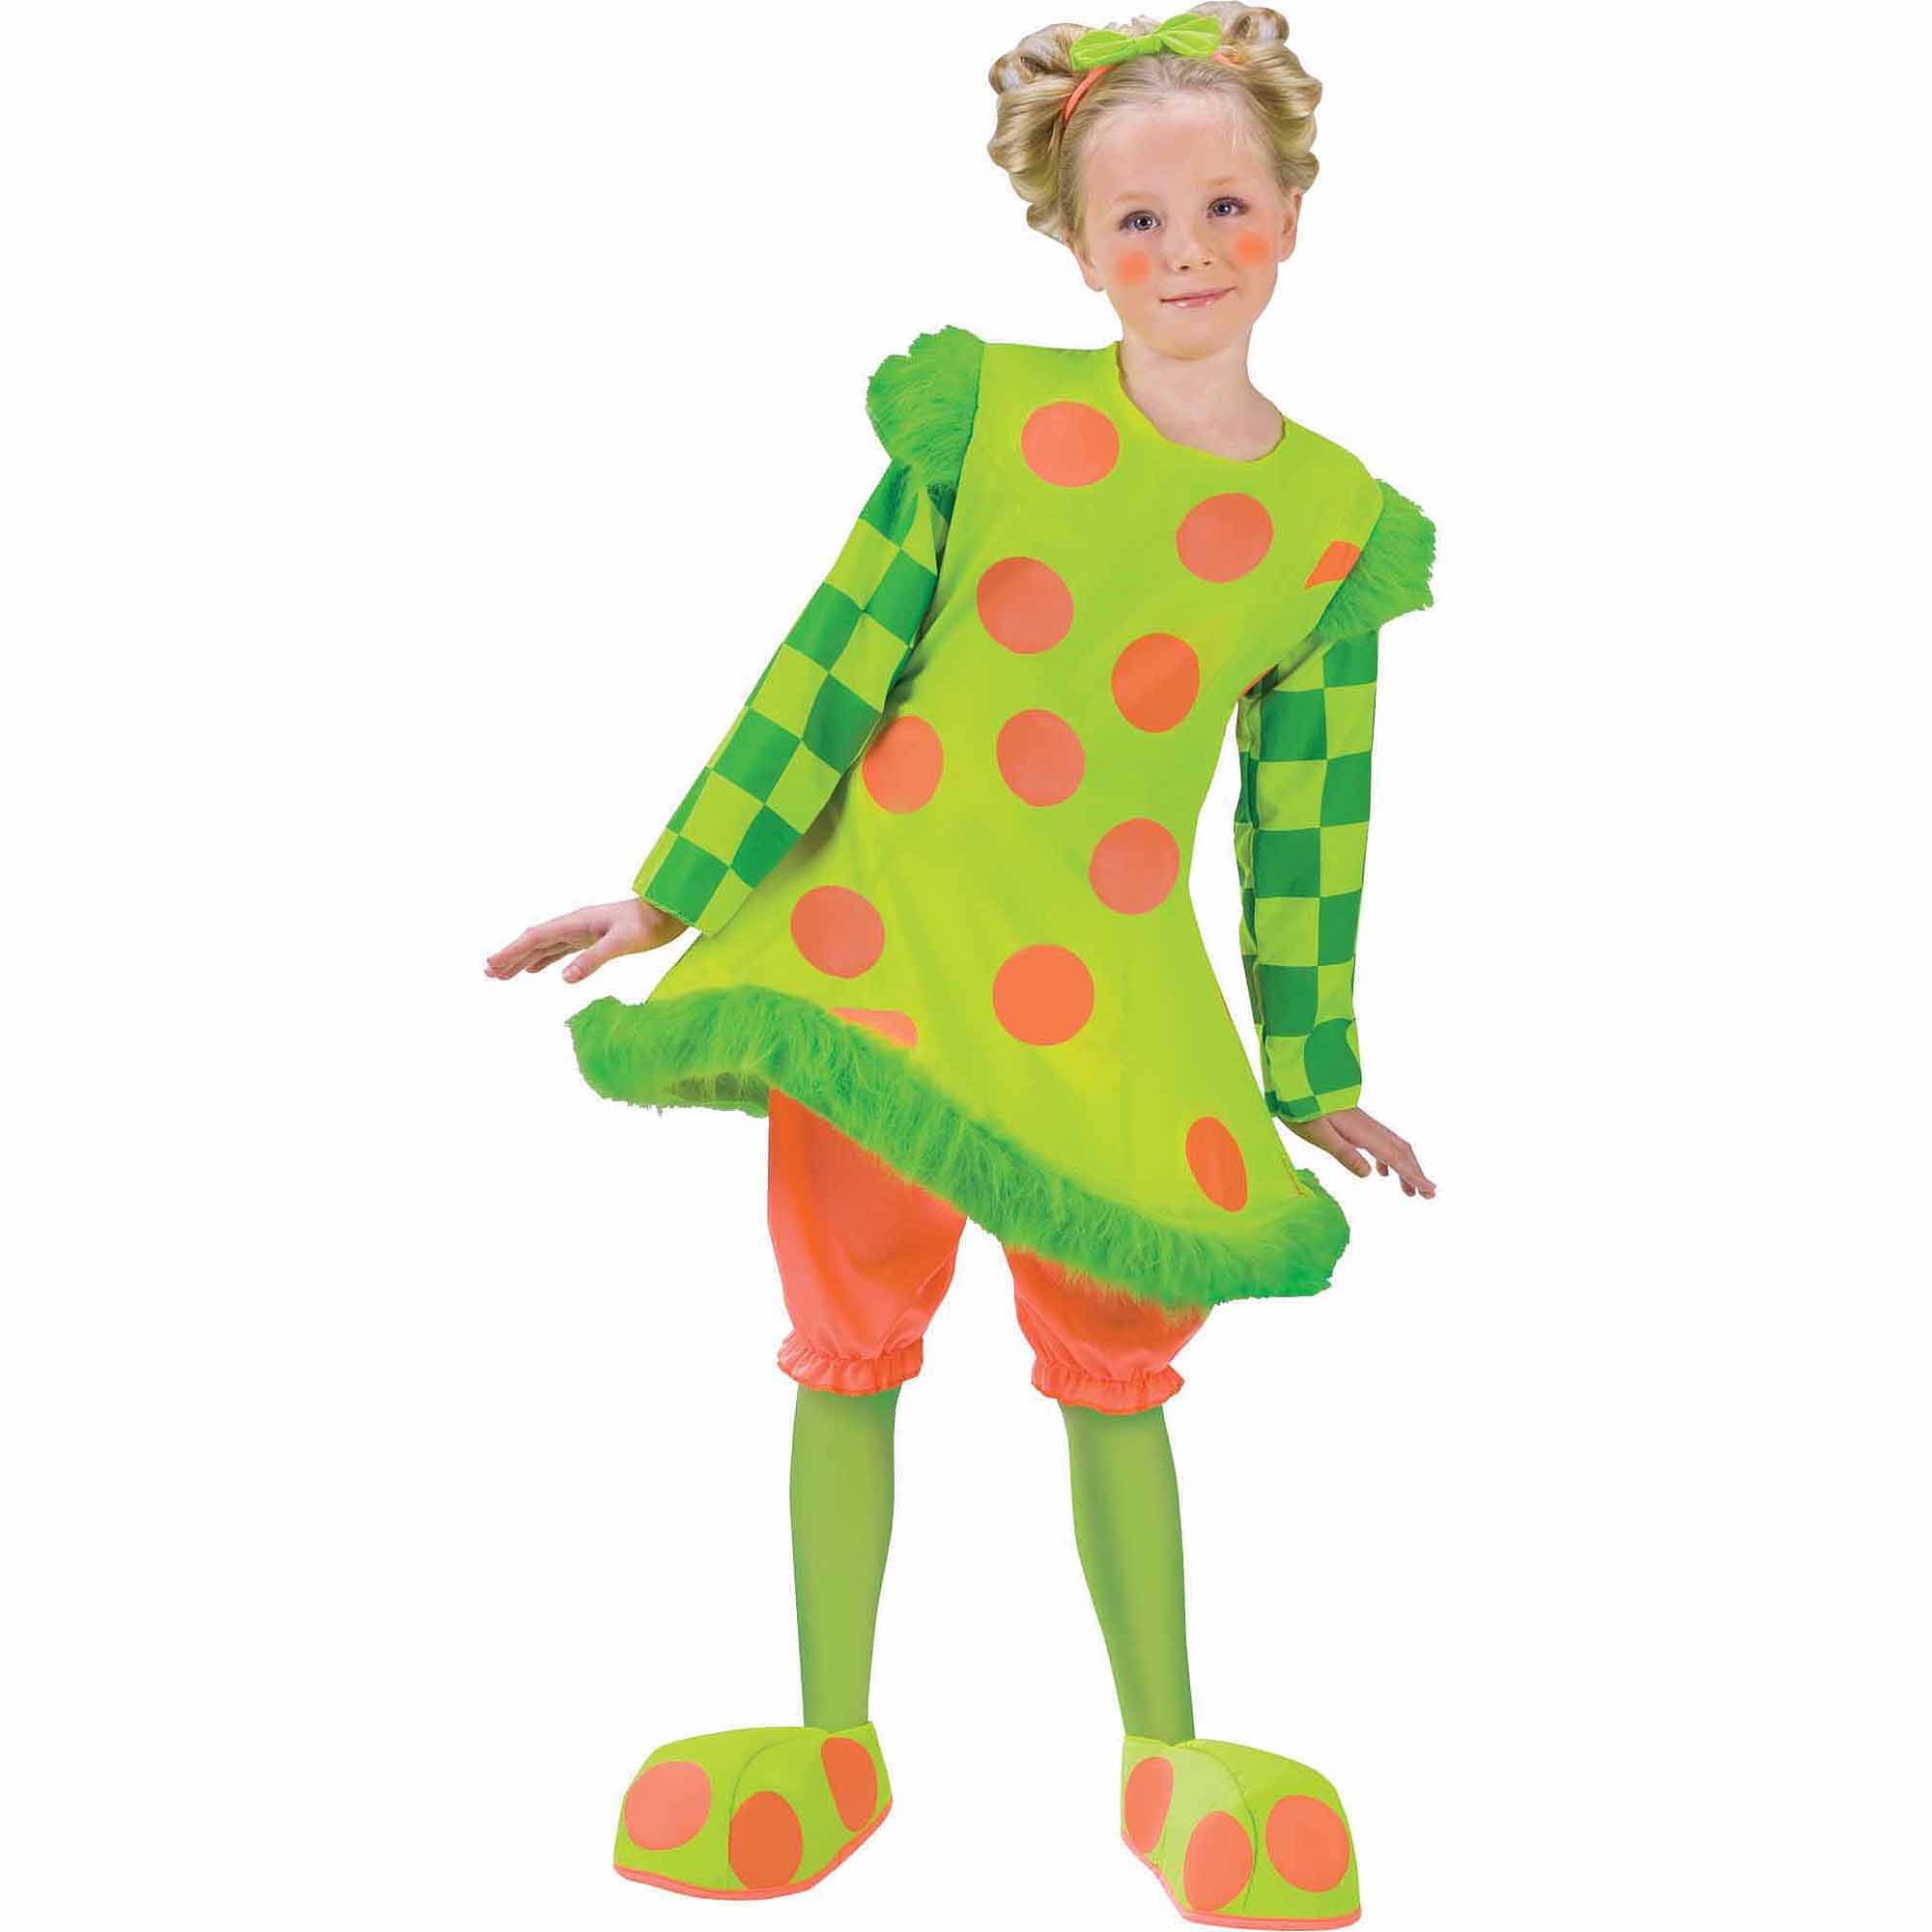 Lolli the Clown Child Girl Halloween Costume - Walmart.com